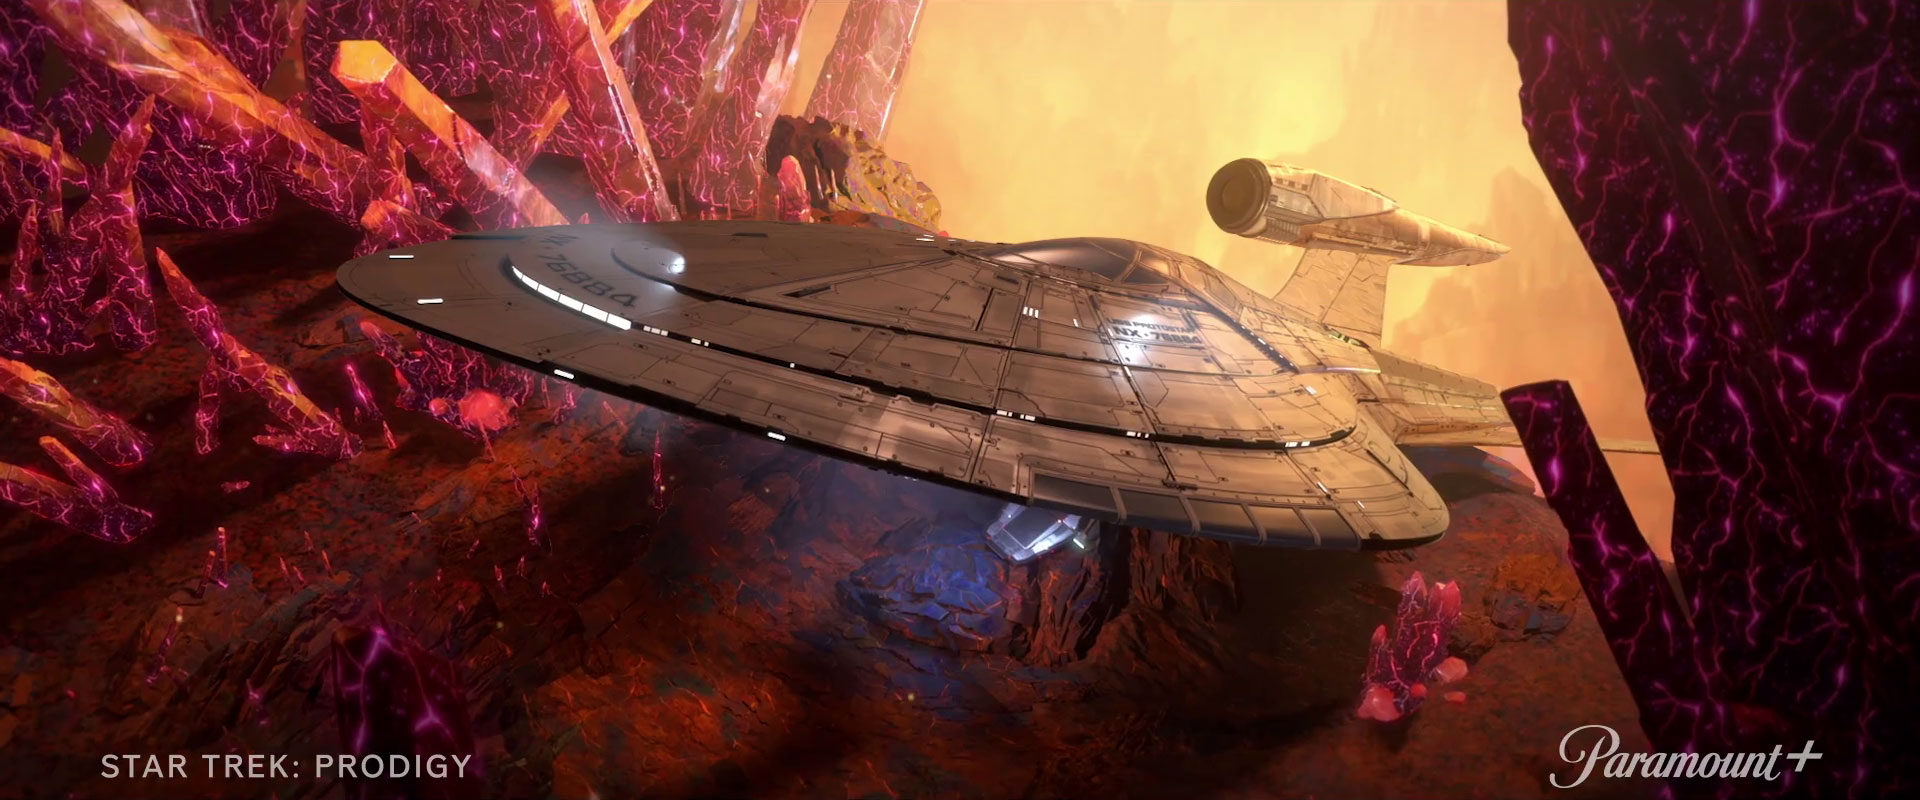 Star Trek Prodigy Episode 6 Release Date